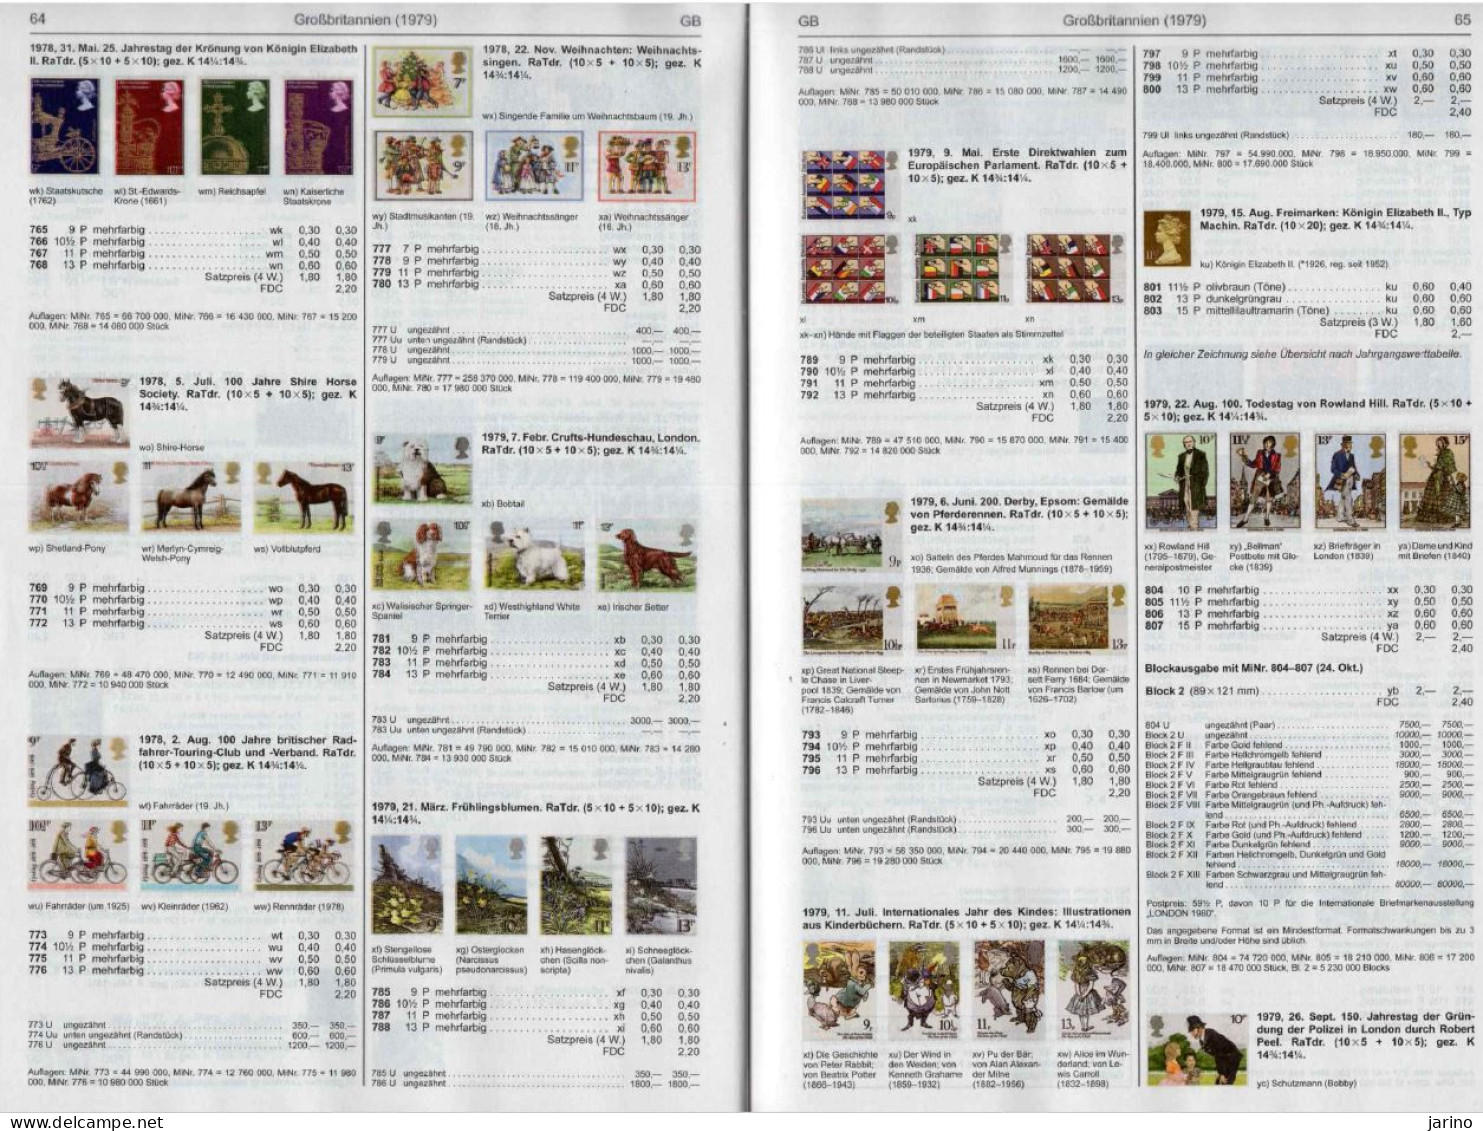 Grossbritannien Michel Catalogue 2022, 570 Pages On CD, UK, Nordirland, Schottland, Wales, Irland - German